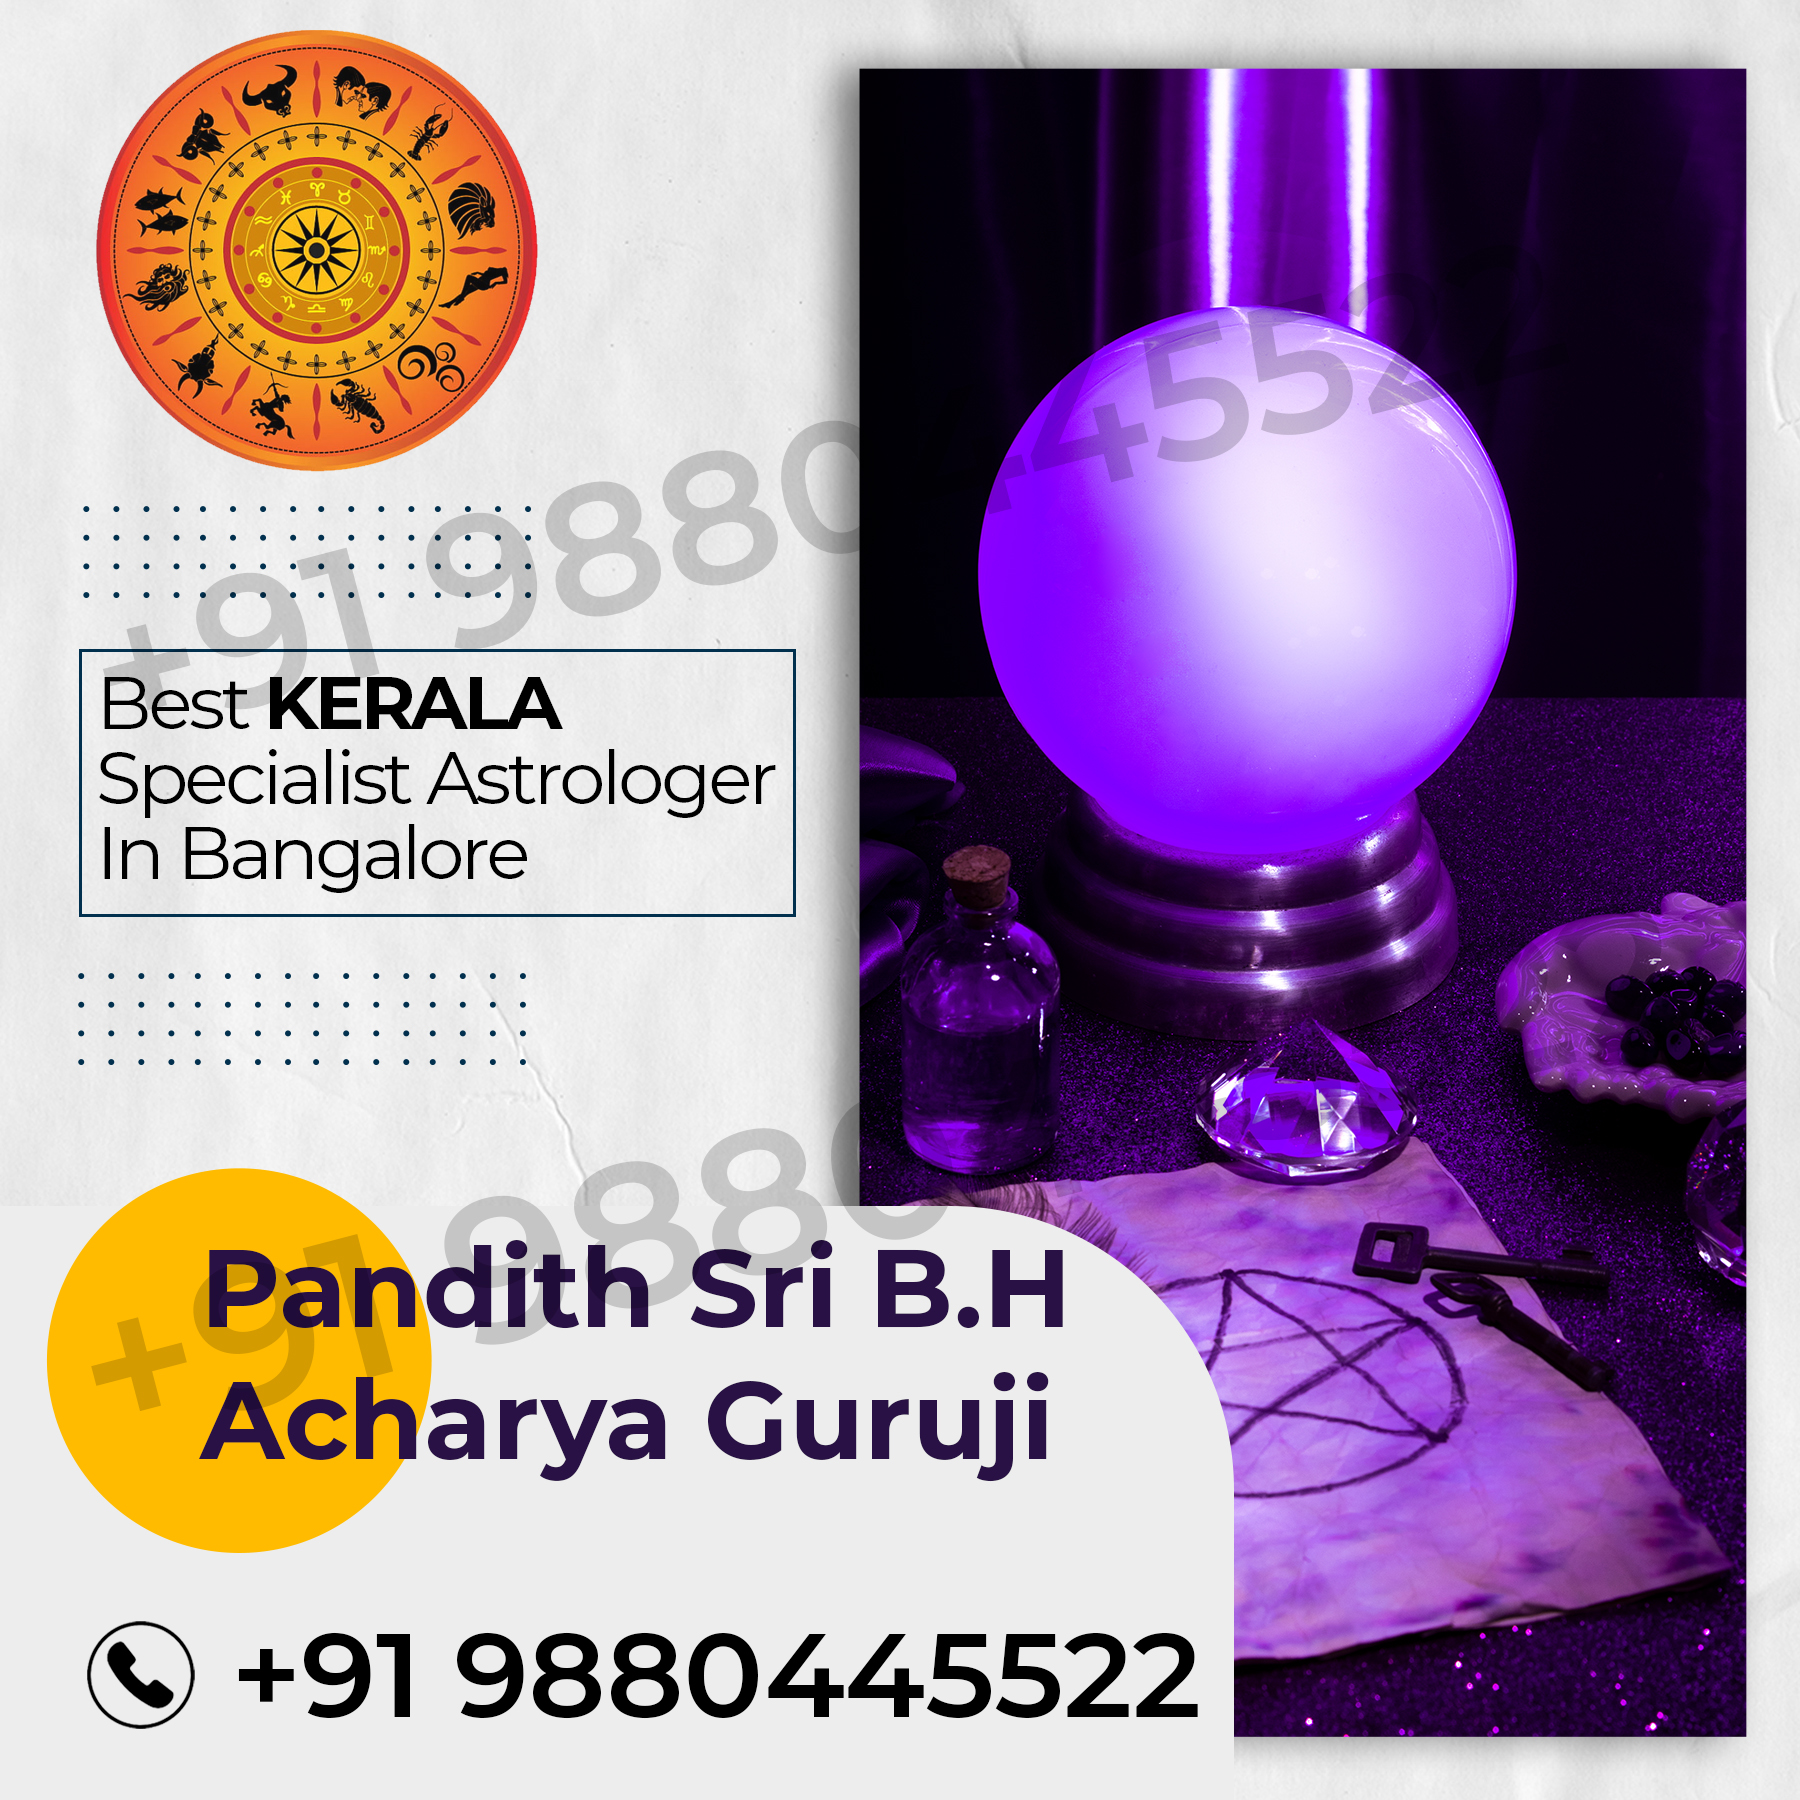 Best Kerala Specialist Astrologer in Bangalore